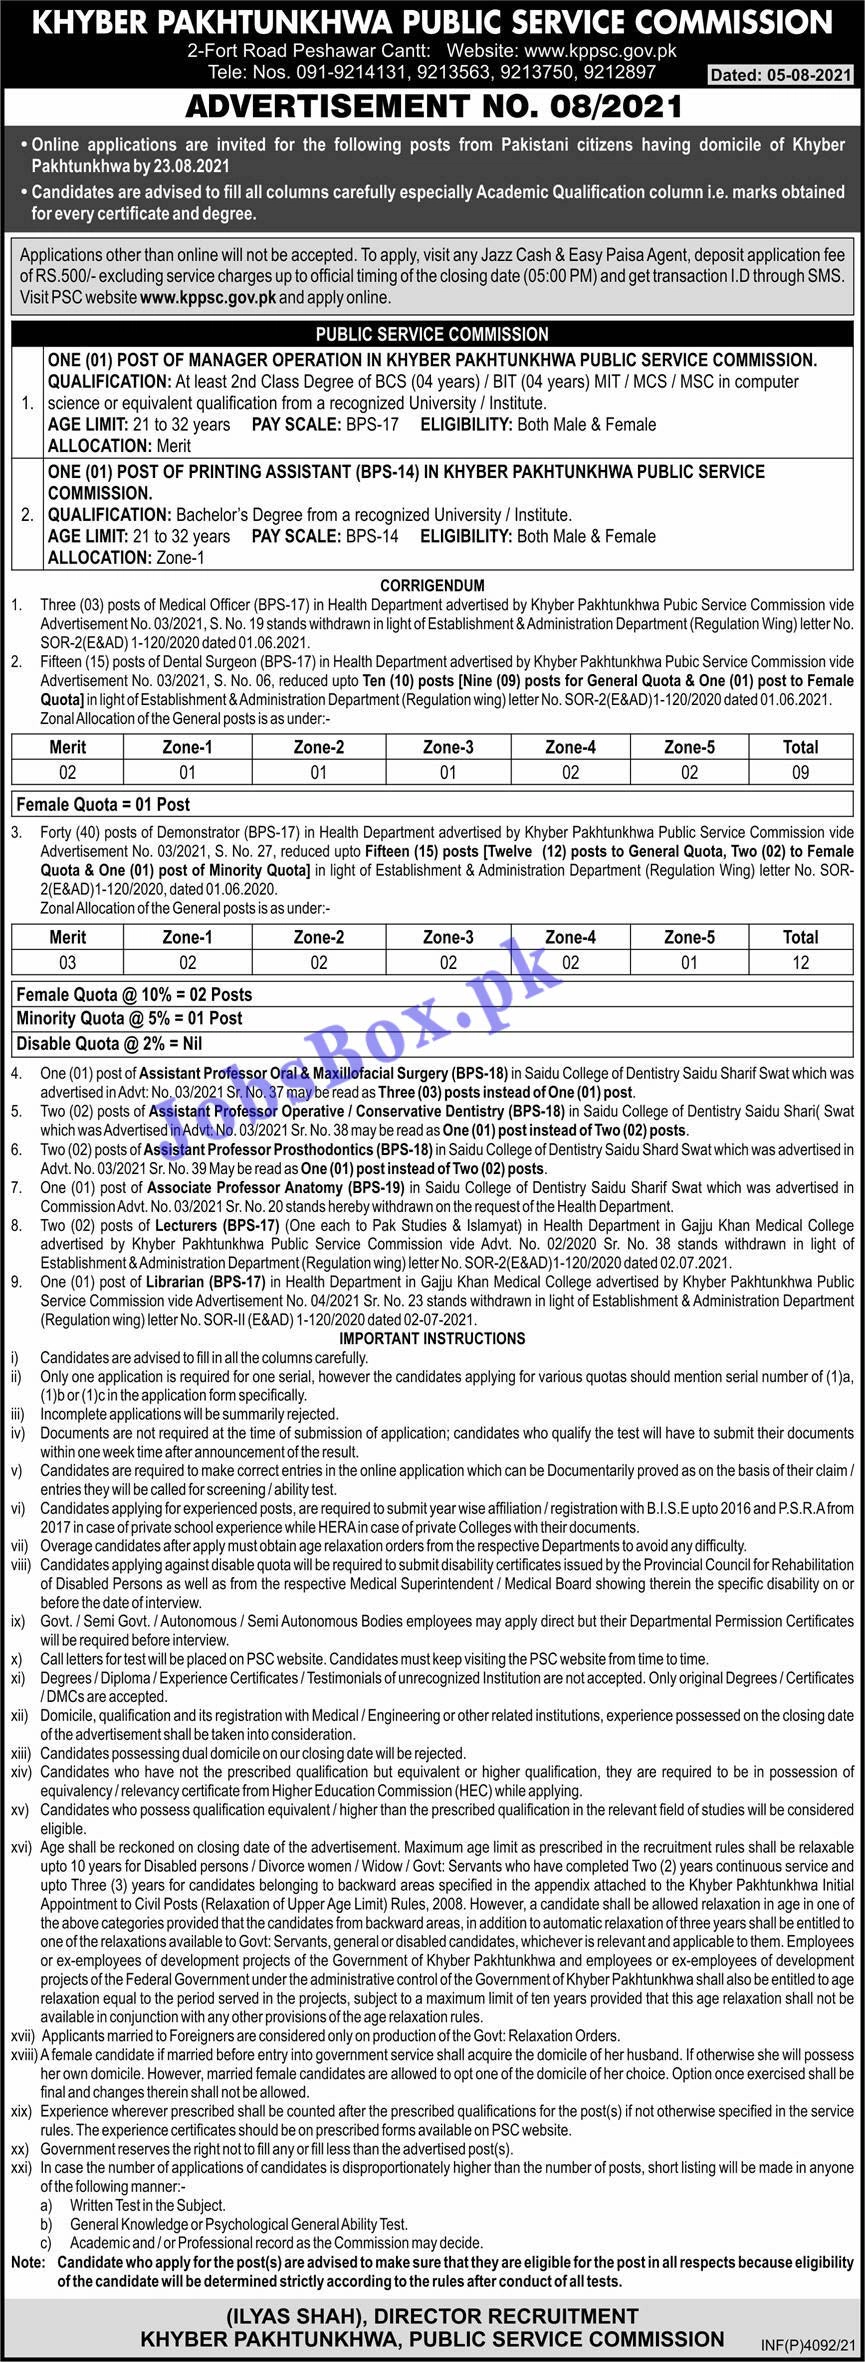 KPPSC Jobs 2021 Advertisement No. 8 - Apply Online via Kppsc.gov.pk